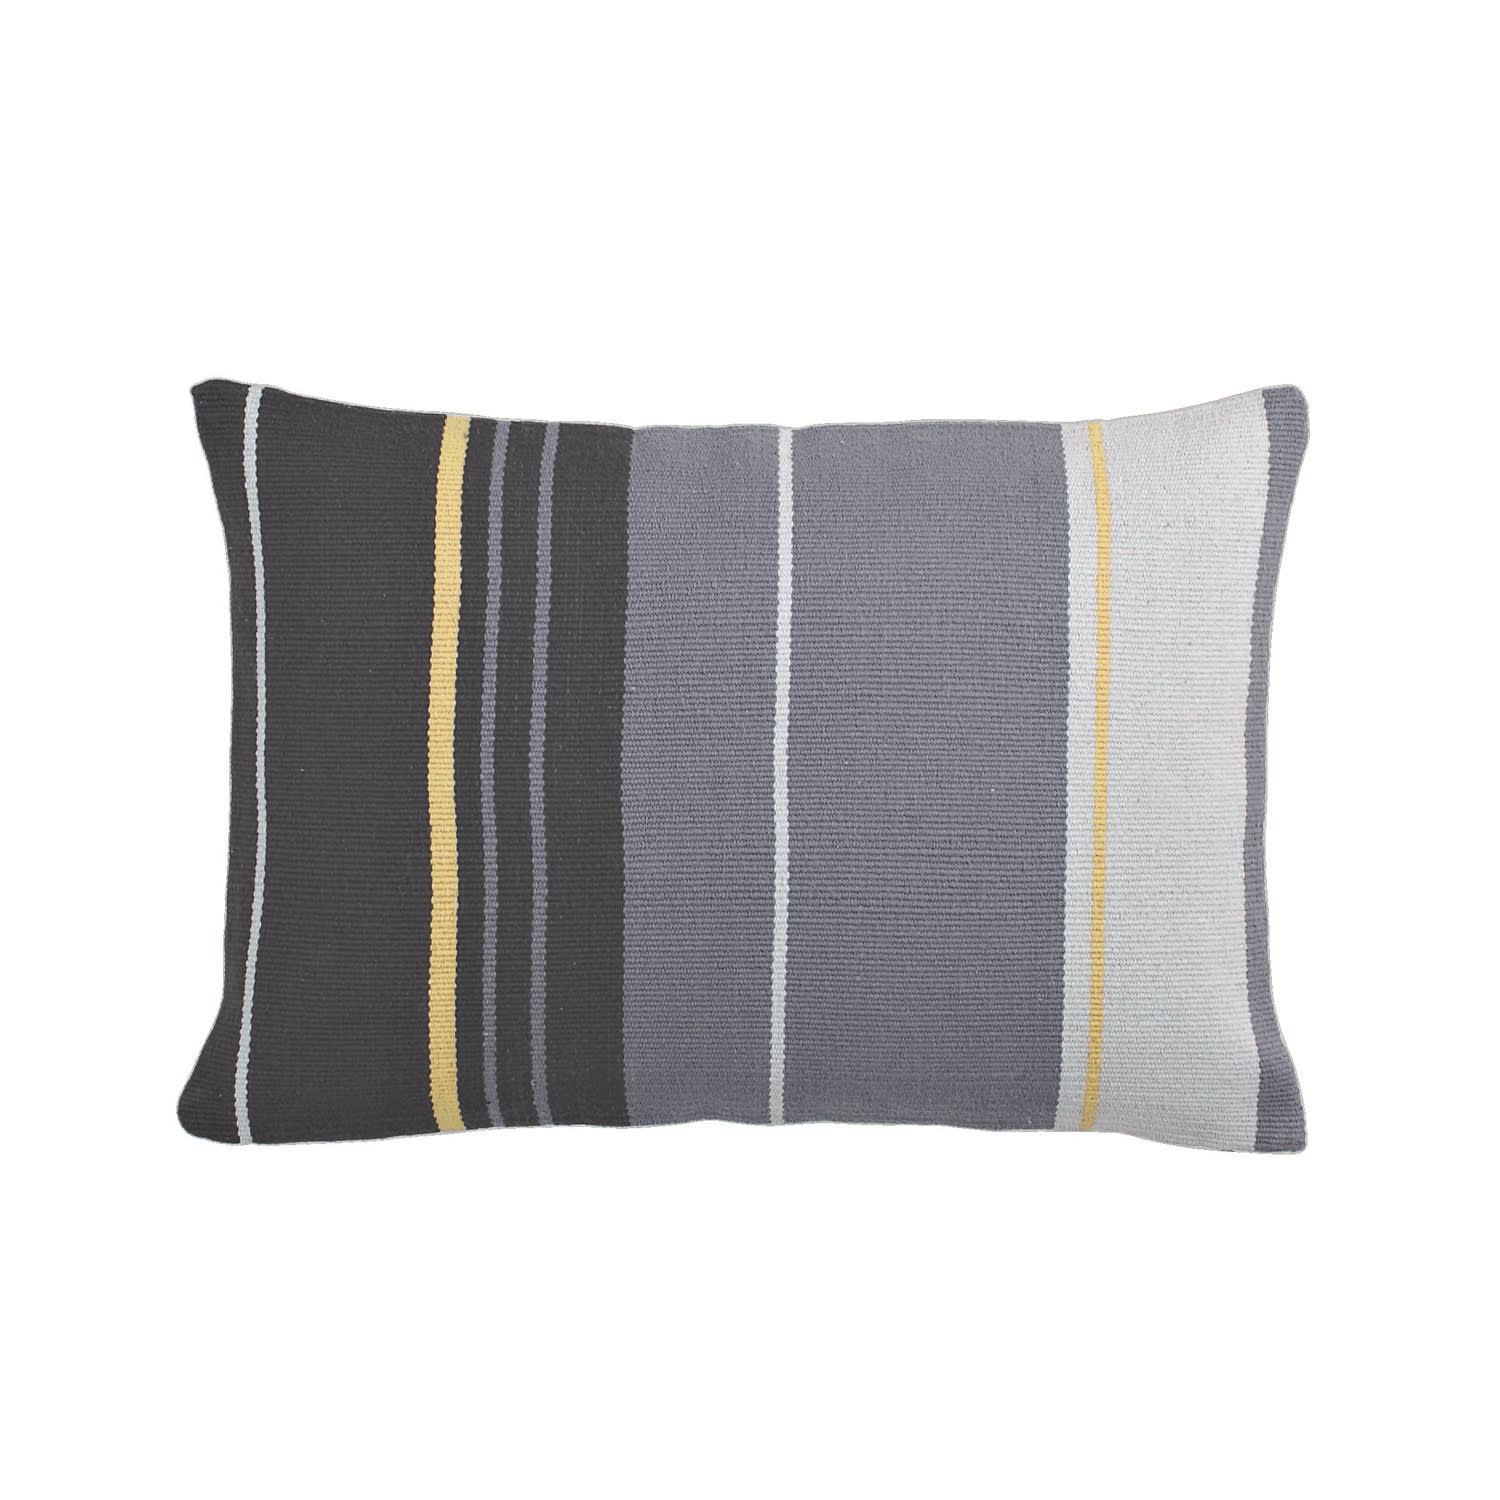 Cstudio Home Stripe Pillow Covers